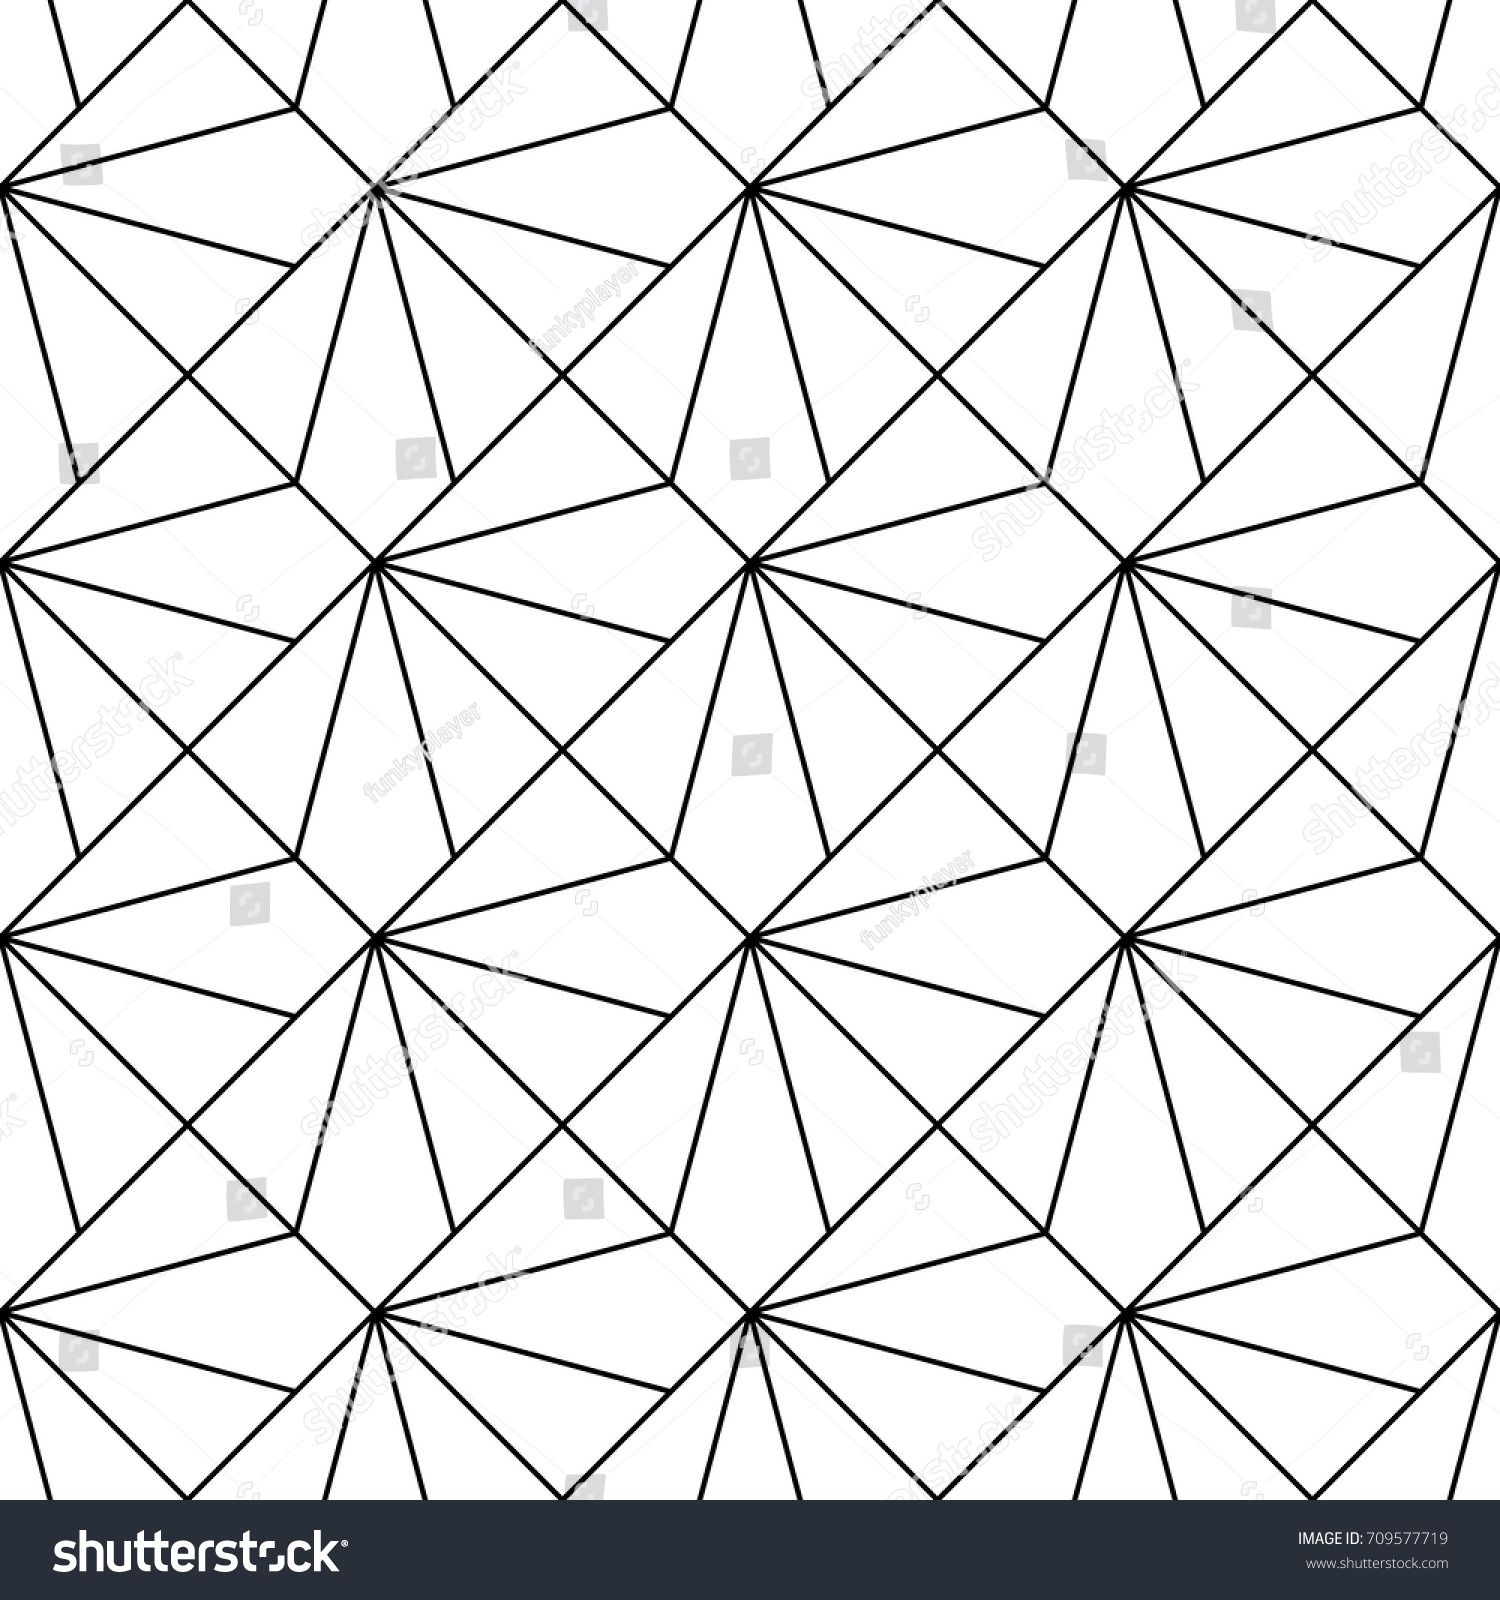 Interlocking Polygons Tessellation Background Image Repeated Stock ...